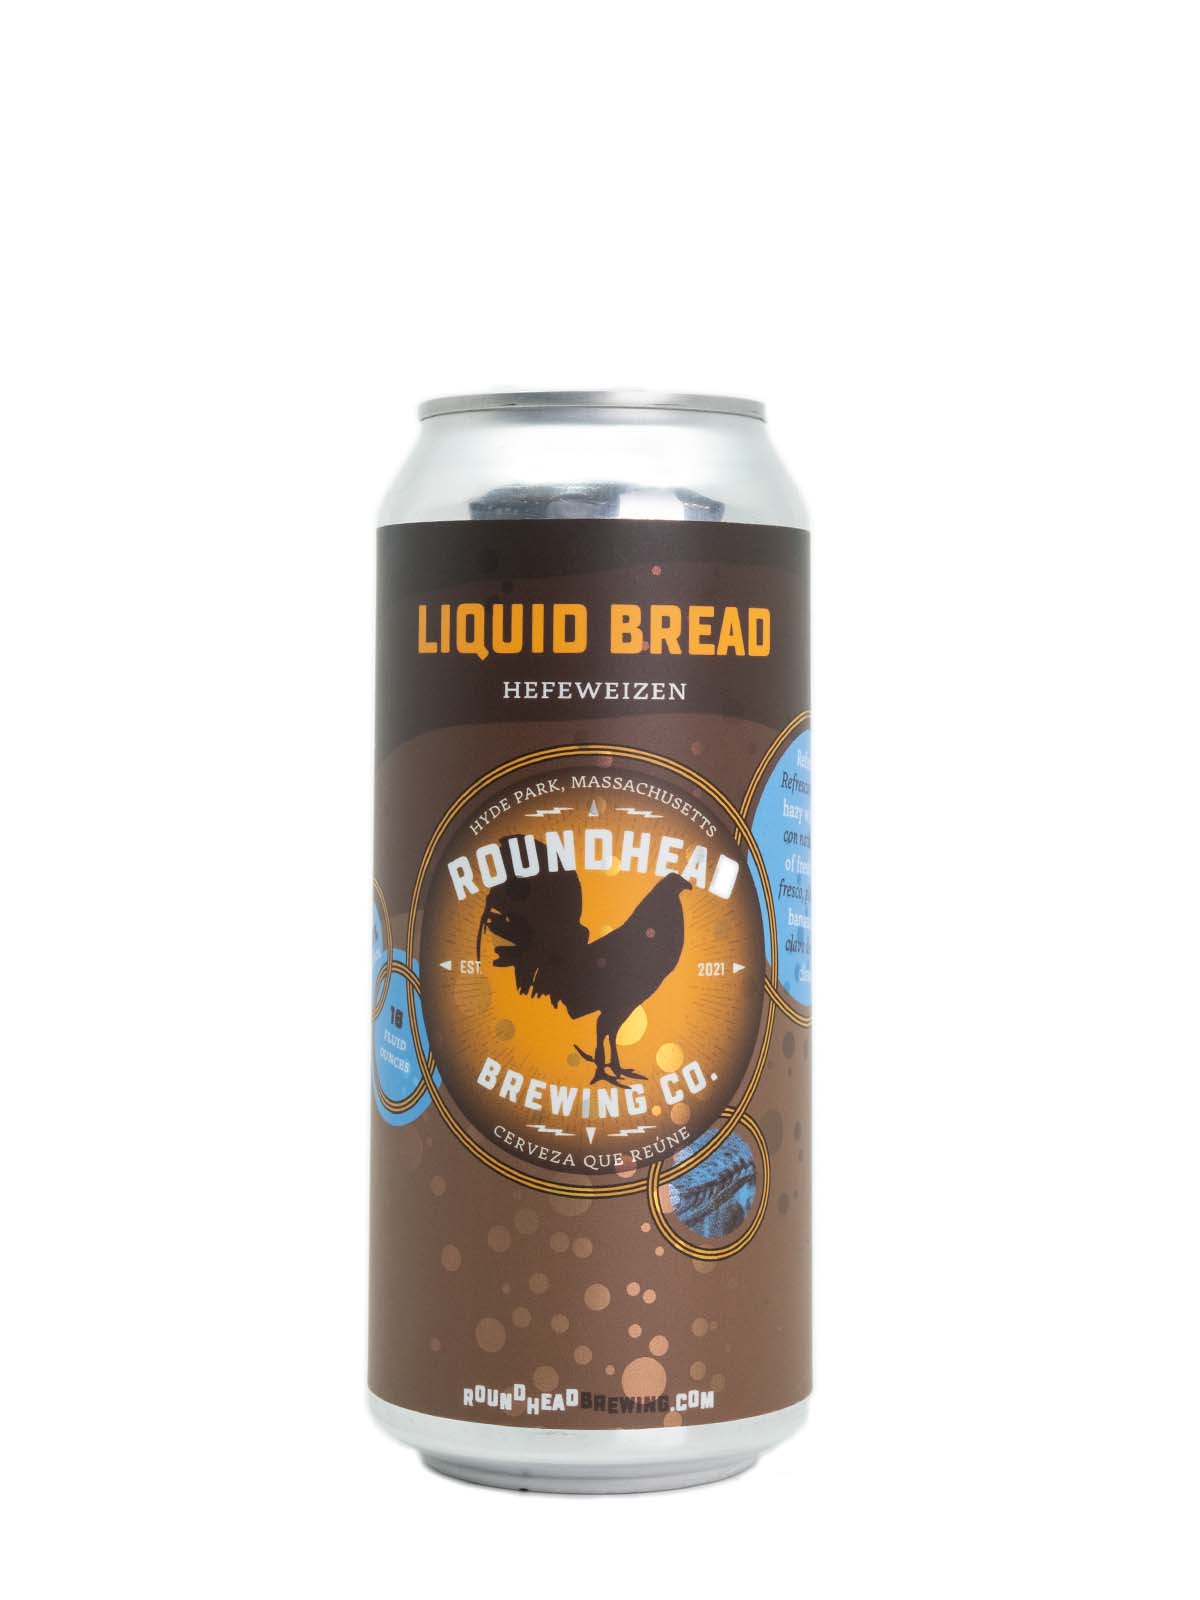 Roundhead Brewing Company "Liquid Bread" Hefeweizen (Hyde Park, MA)